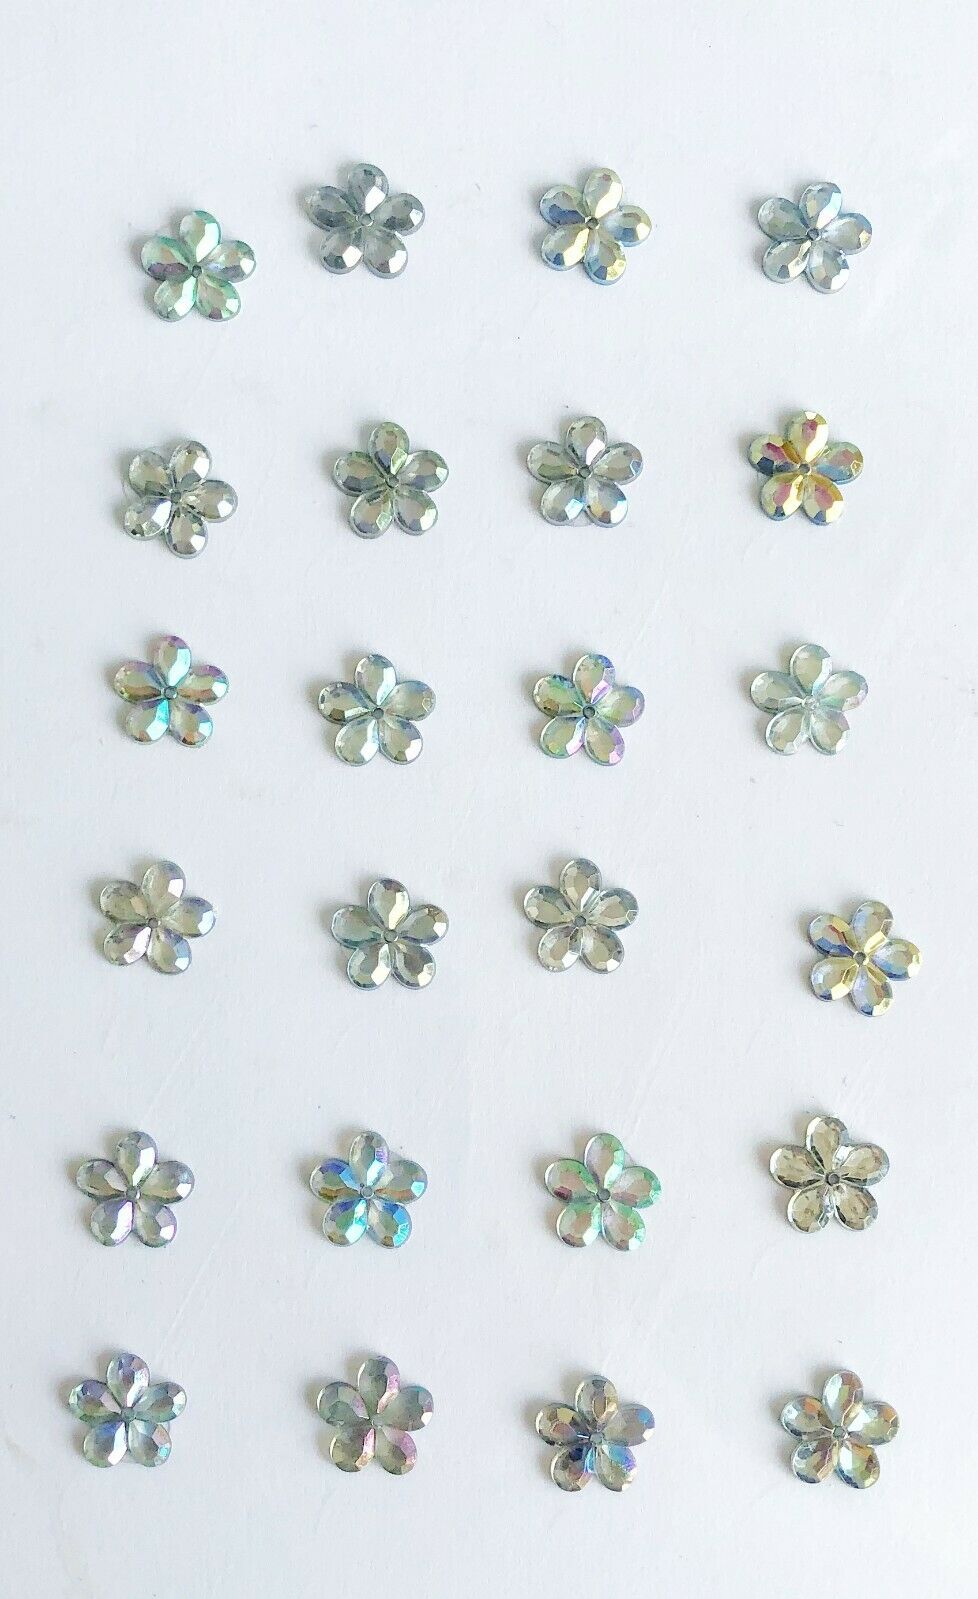 Self Adhesive Diamante Stick On Rhinestones Gems Crystals Daisy Flowers Craft